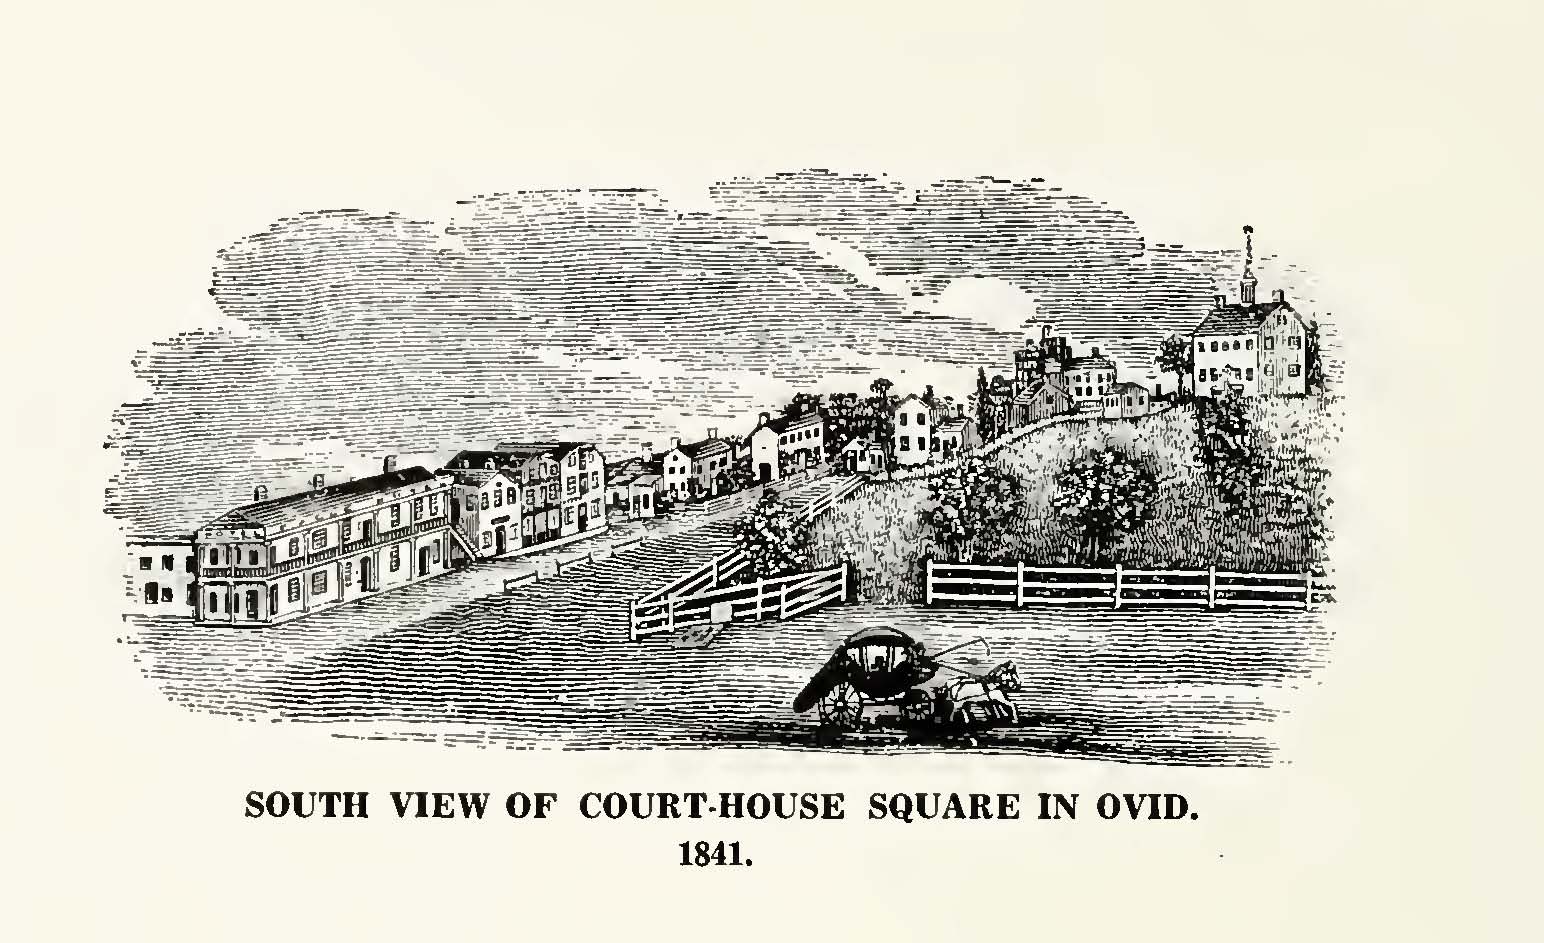 Ovid, Seneca County, New York, 1841